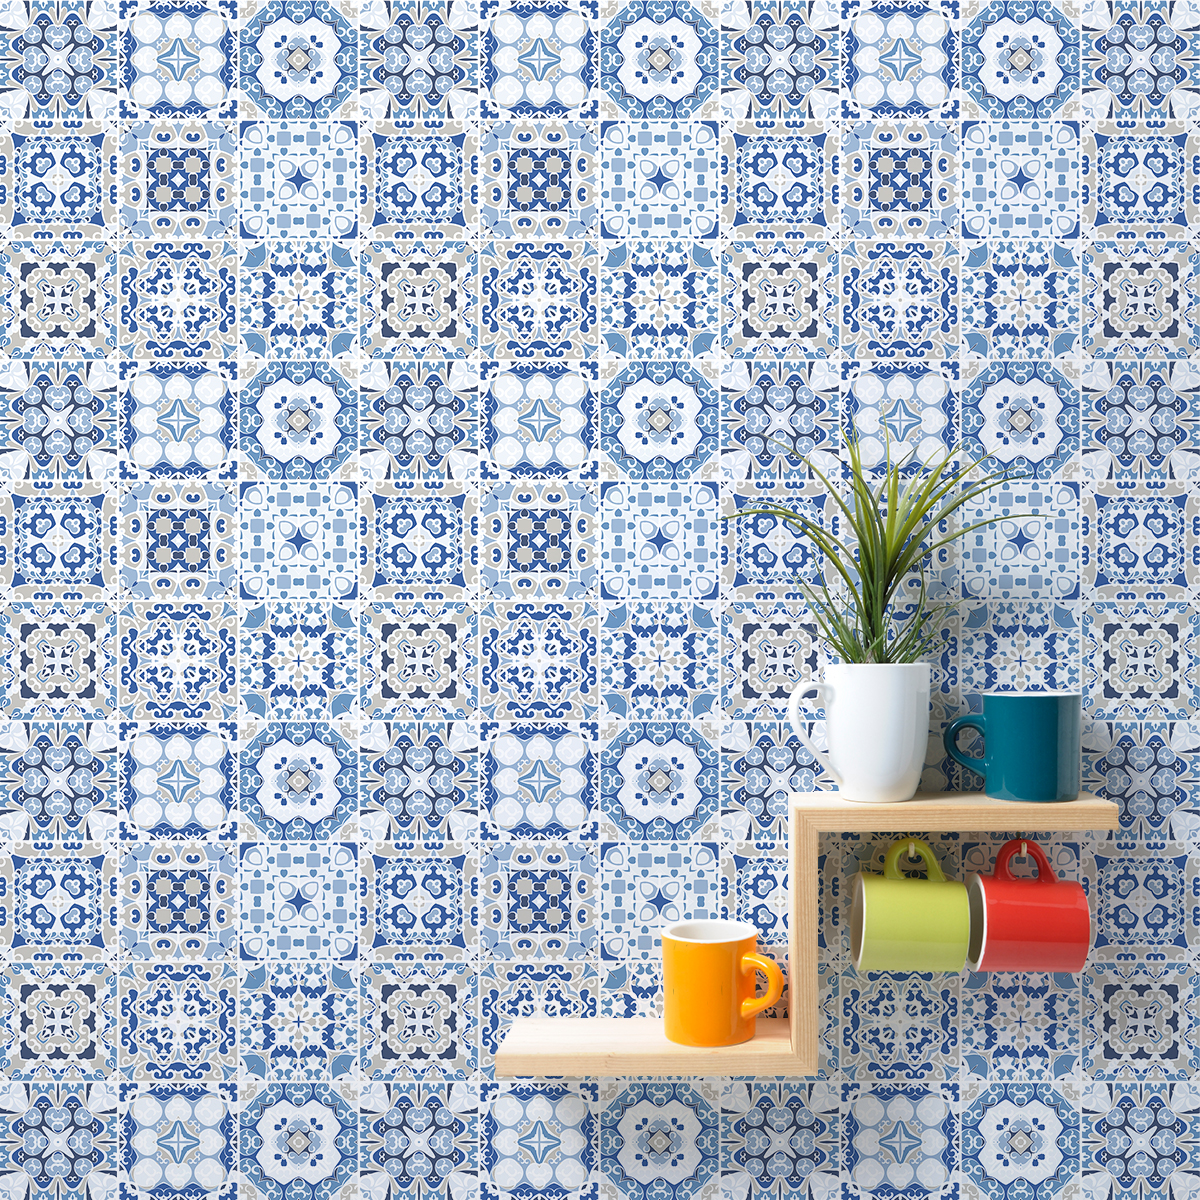 9 wall stickers cement tiles azulejos renatino